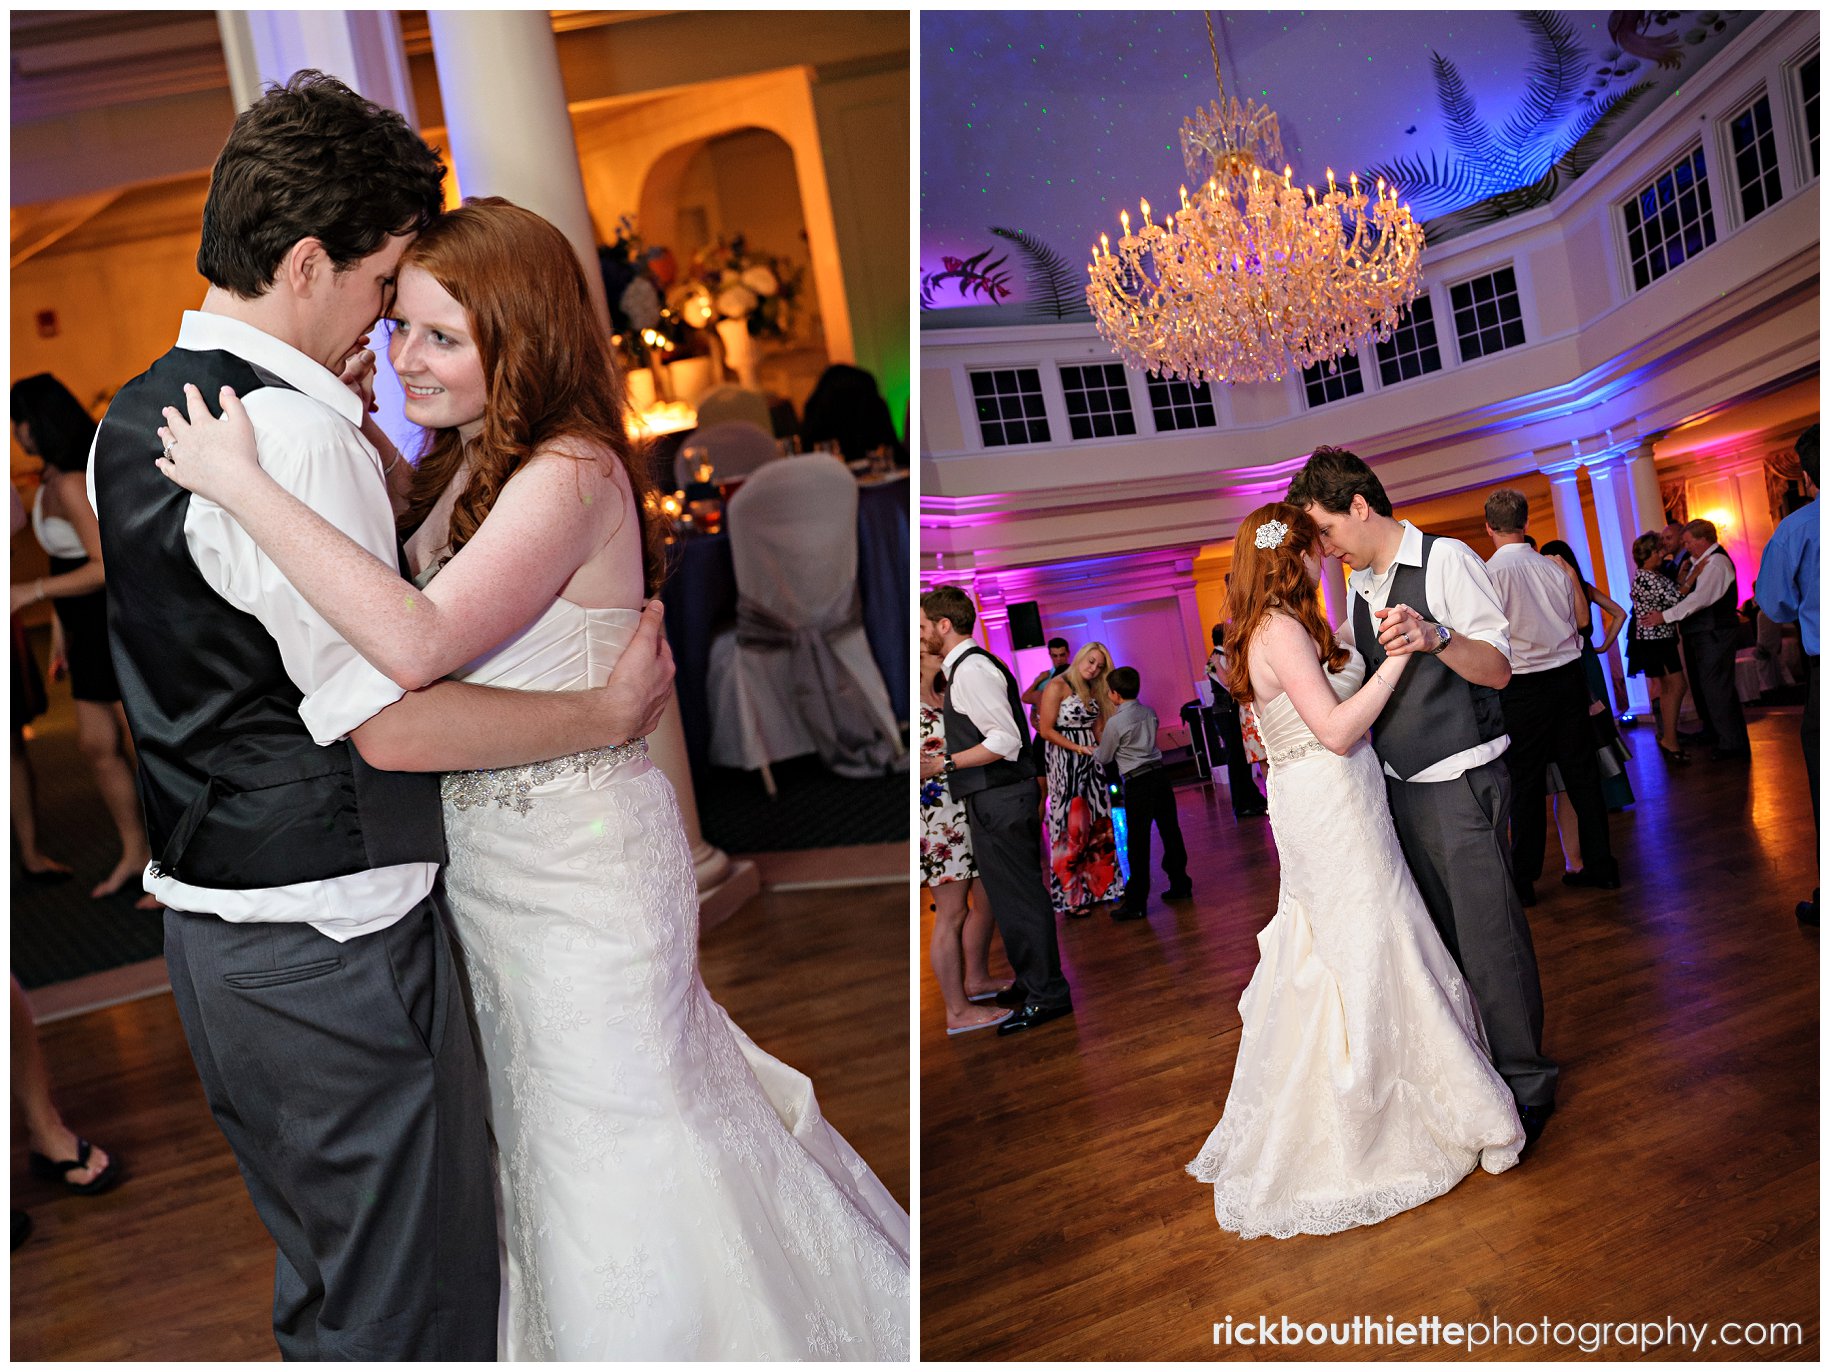 bride & groom dance at wedding rectption